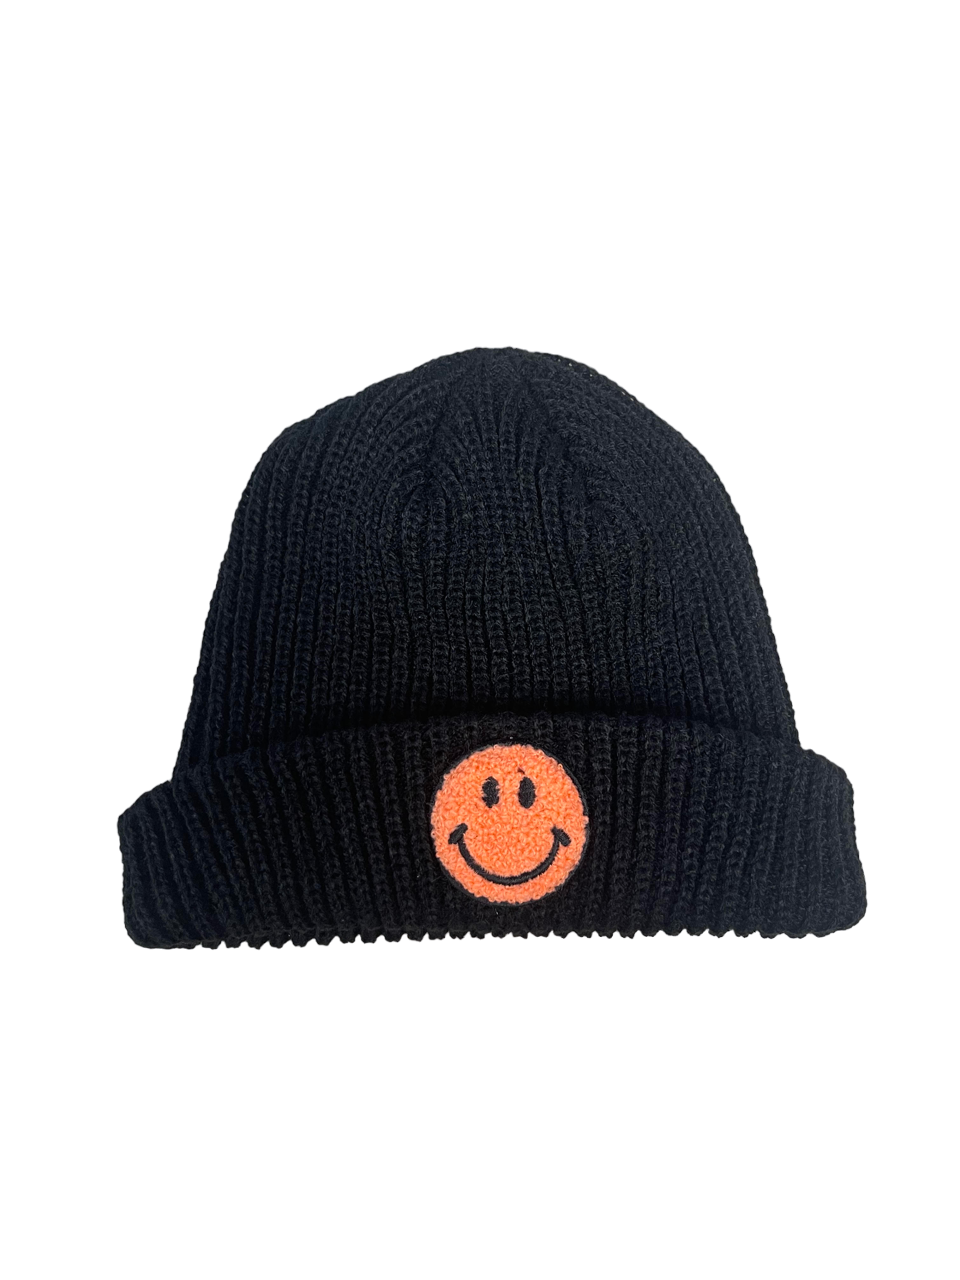 Black Hat With Orange Smile